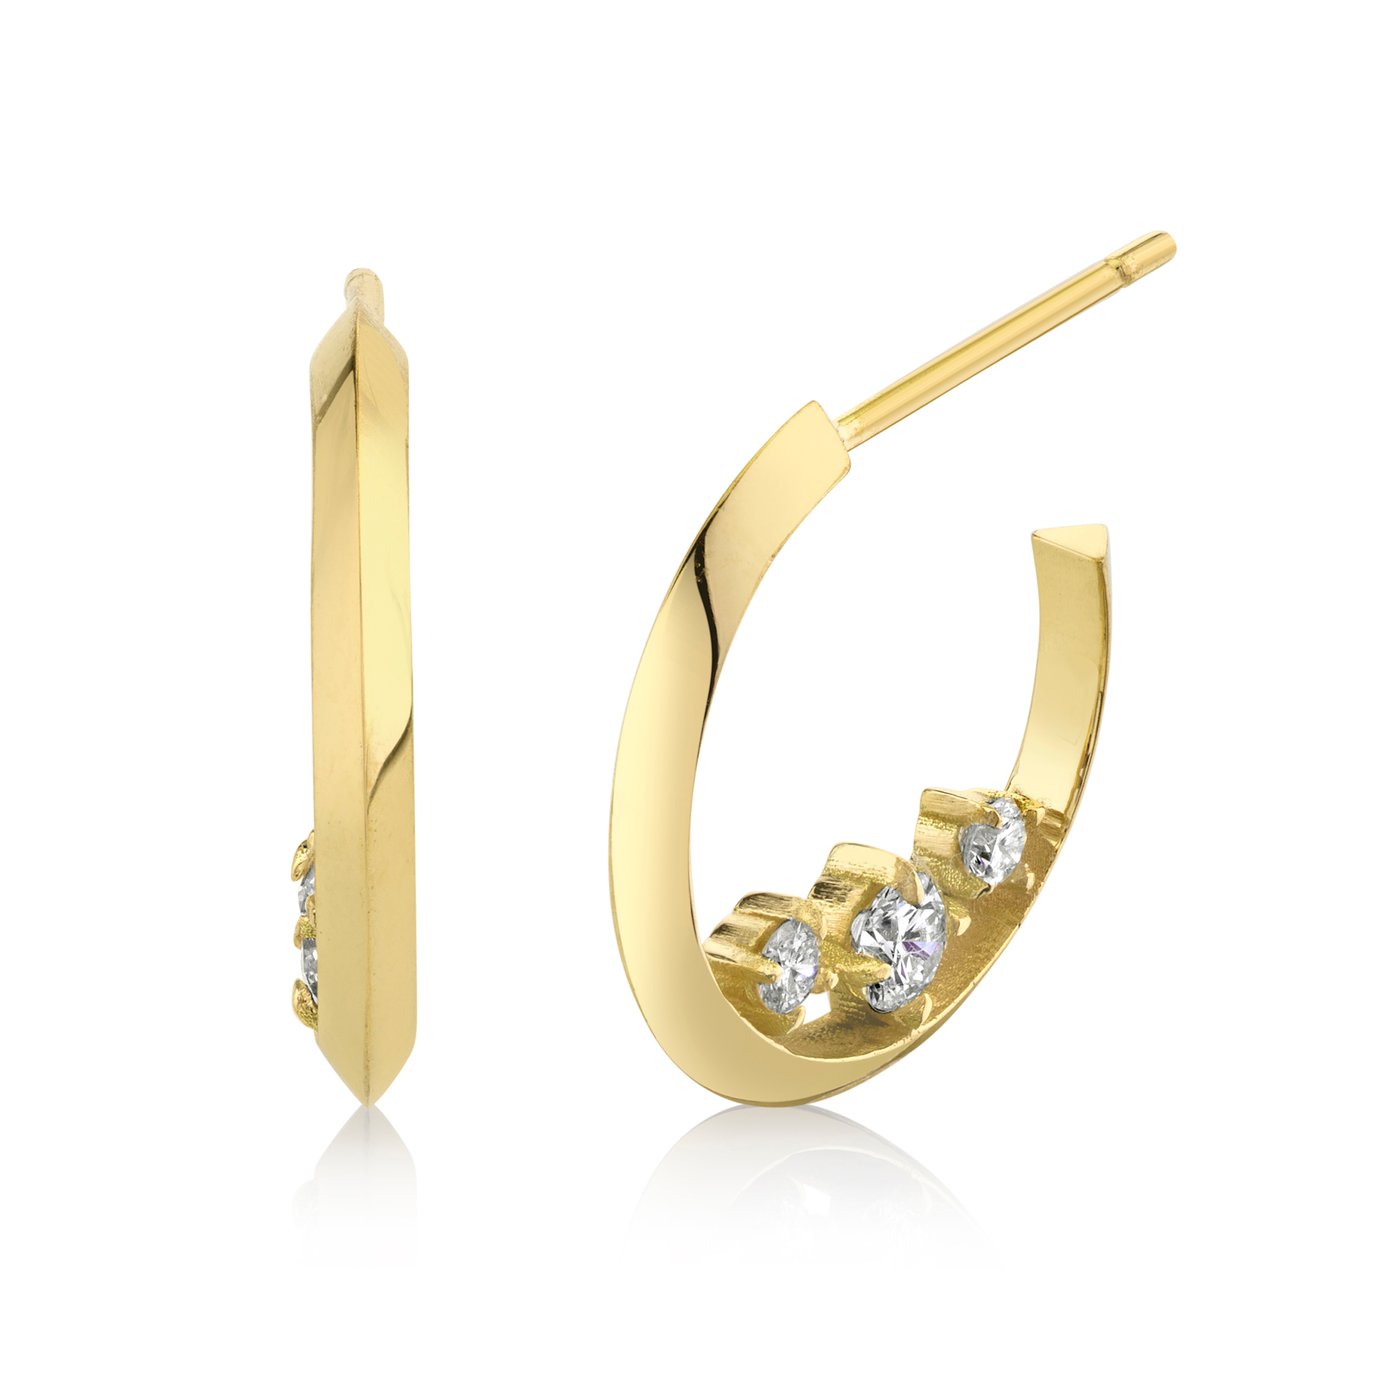 Lizzie Mandler Fine Jewelry 18kt yellow gold Interrupted Knife Edge cuff